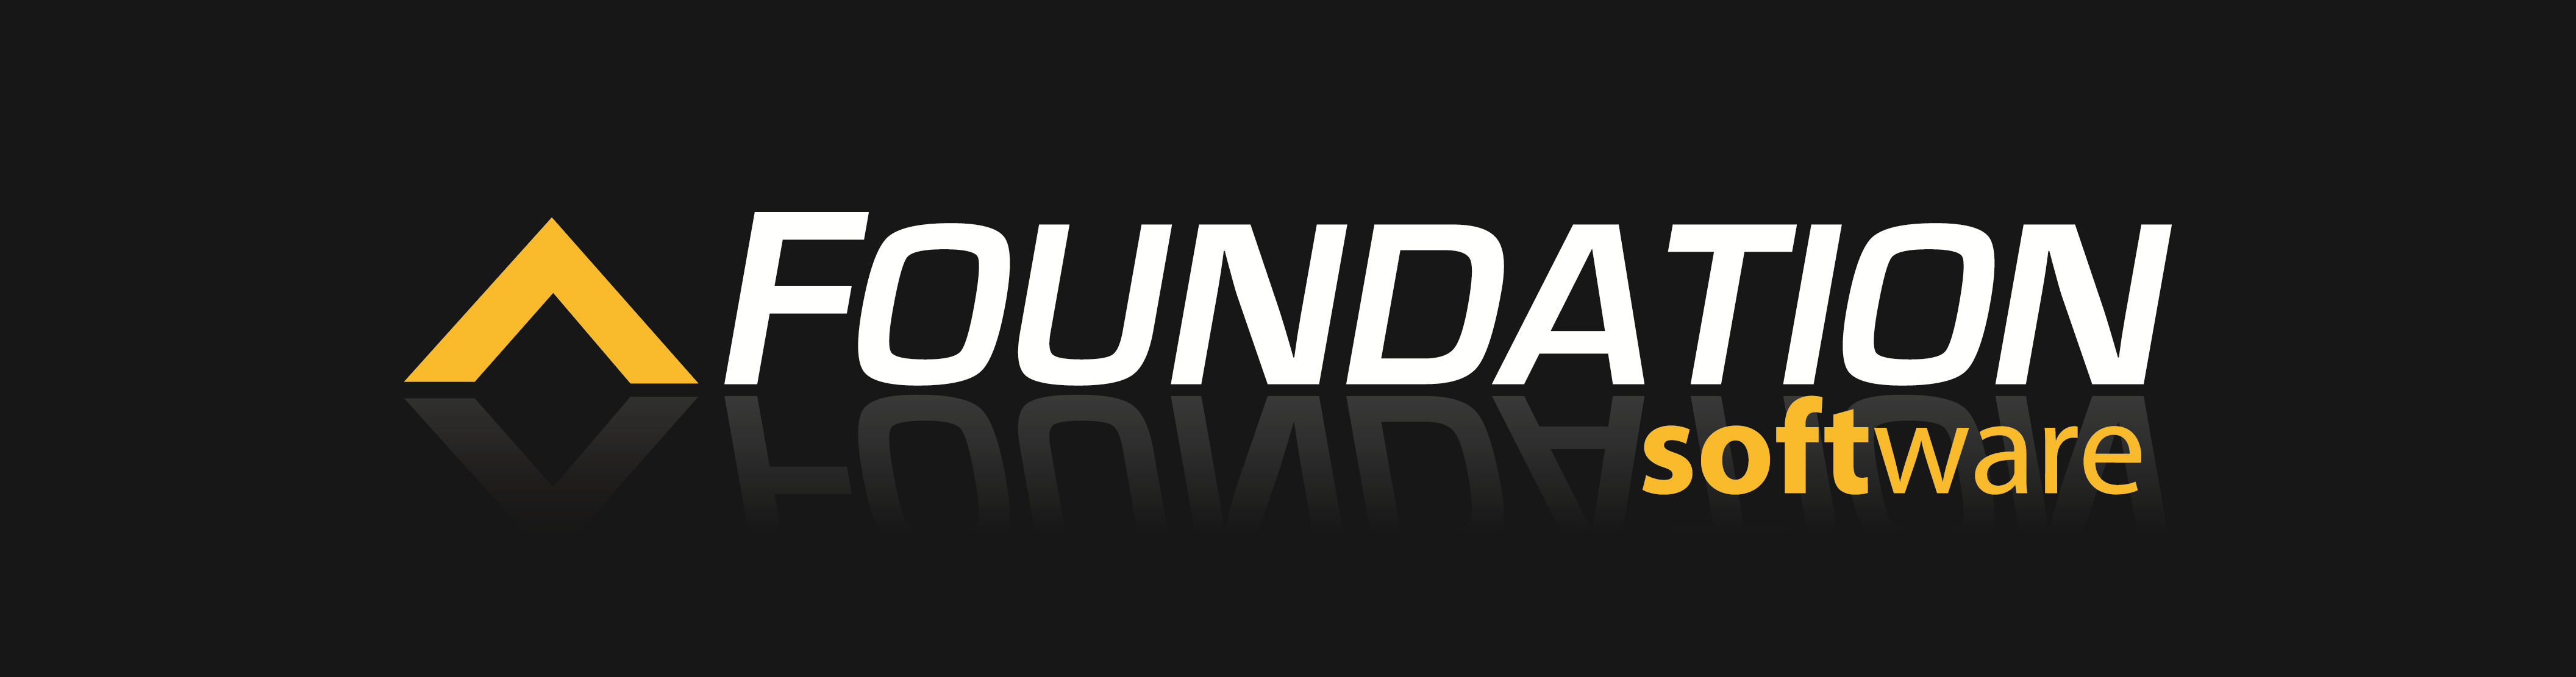 Foundation Software logo